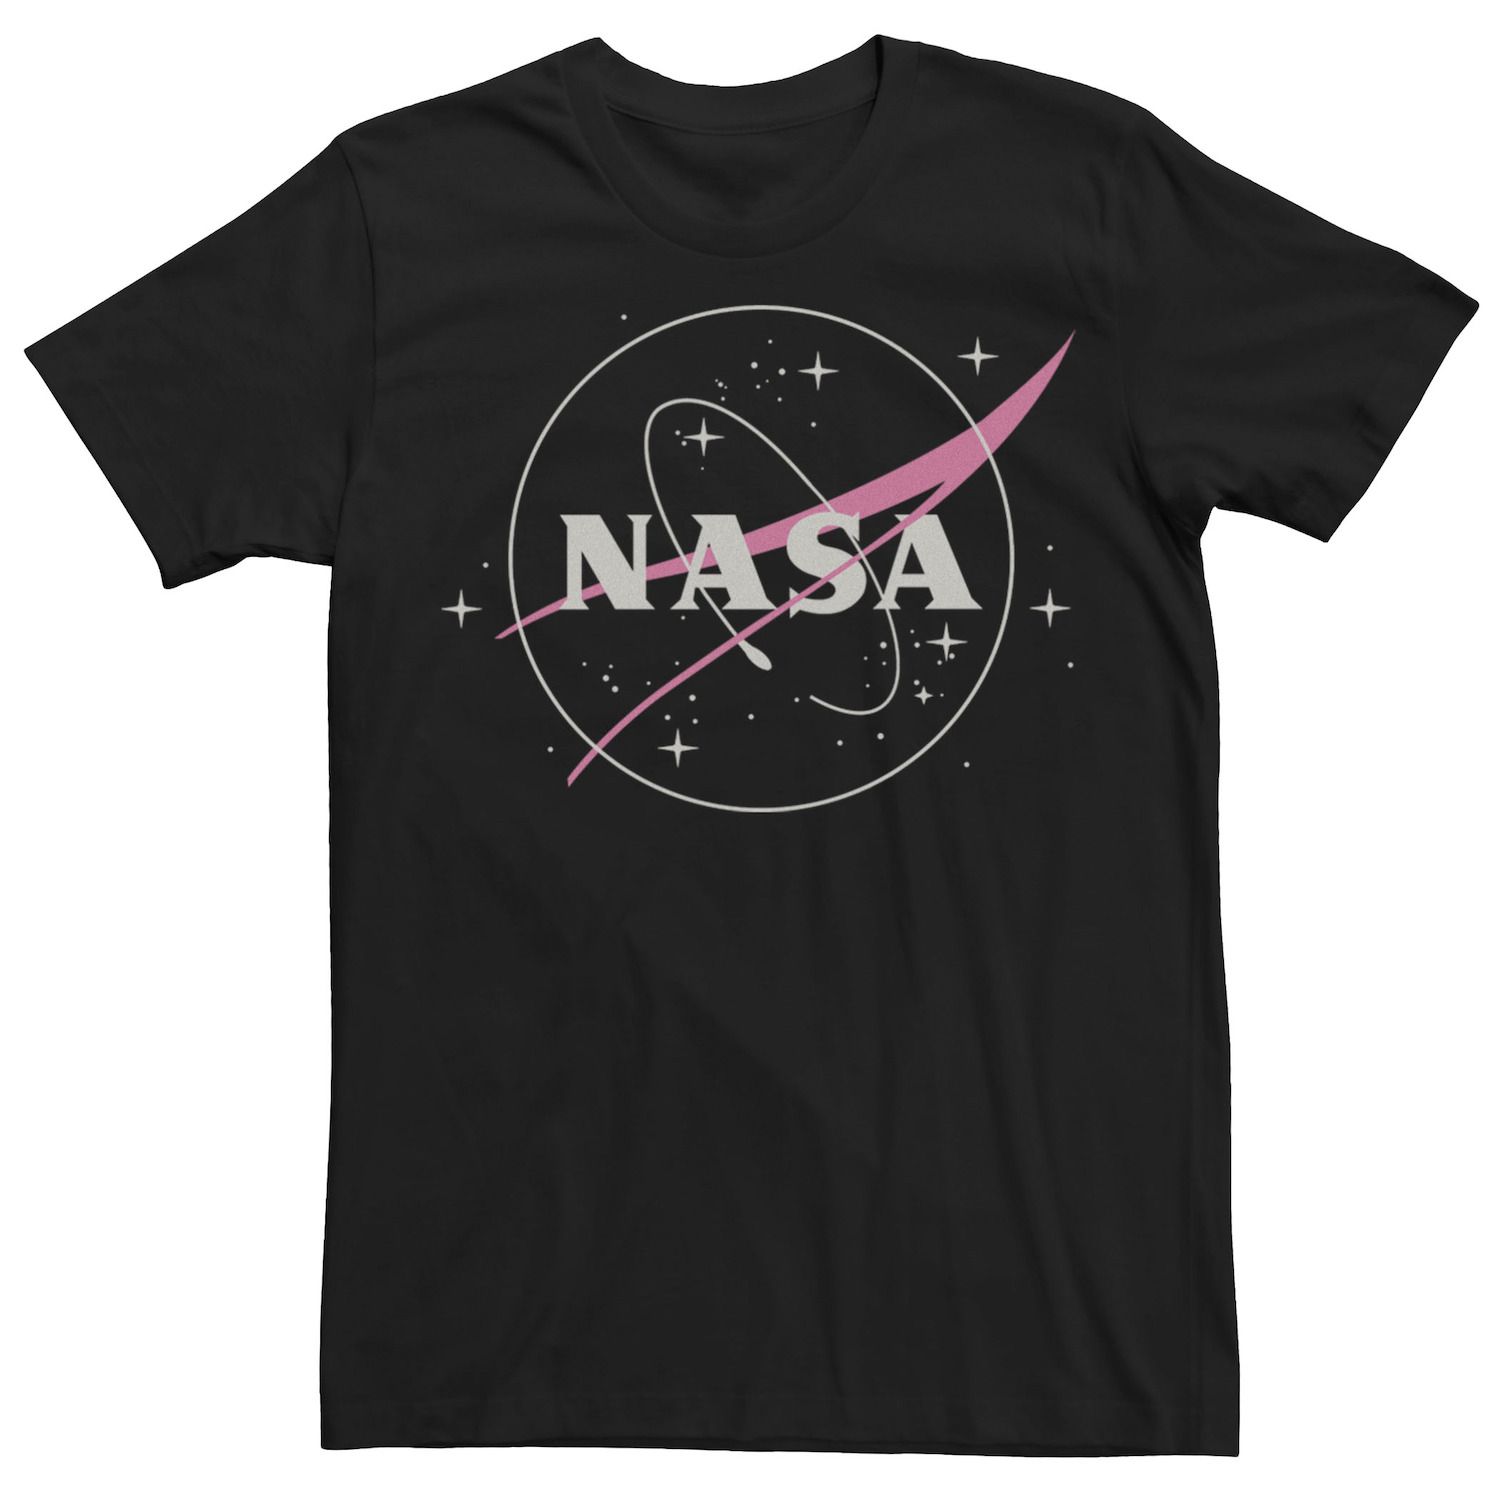 Мужская футболка с простым логотипом NASA Licensed Character